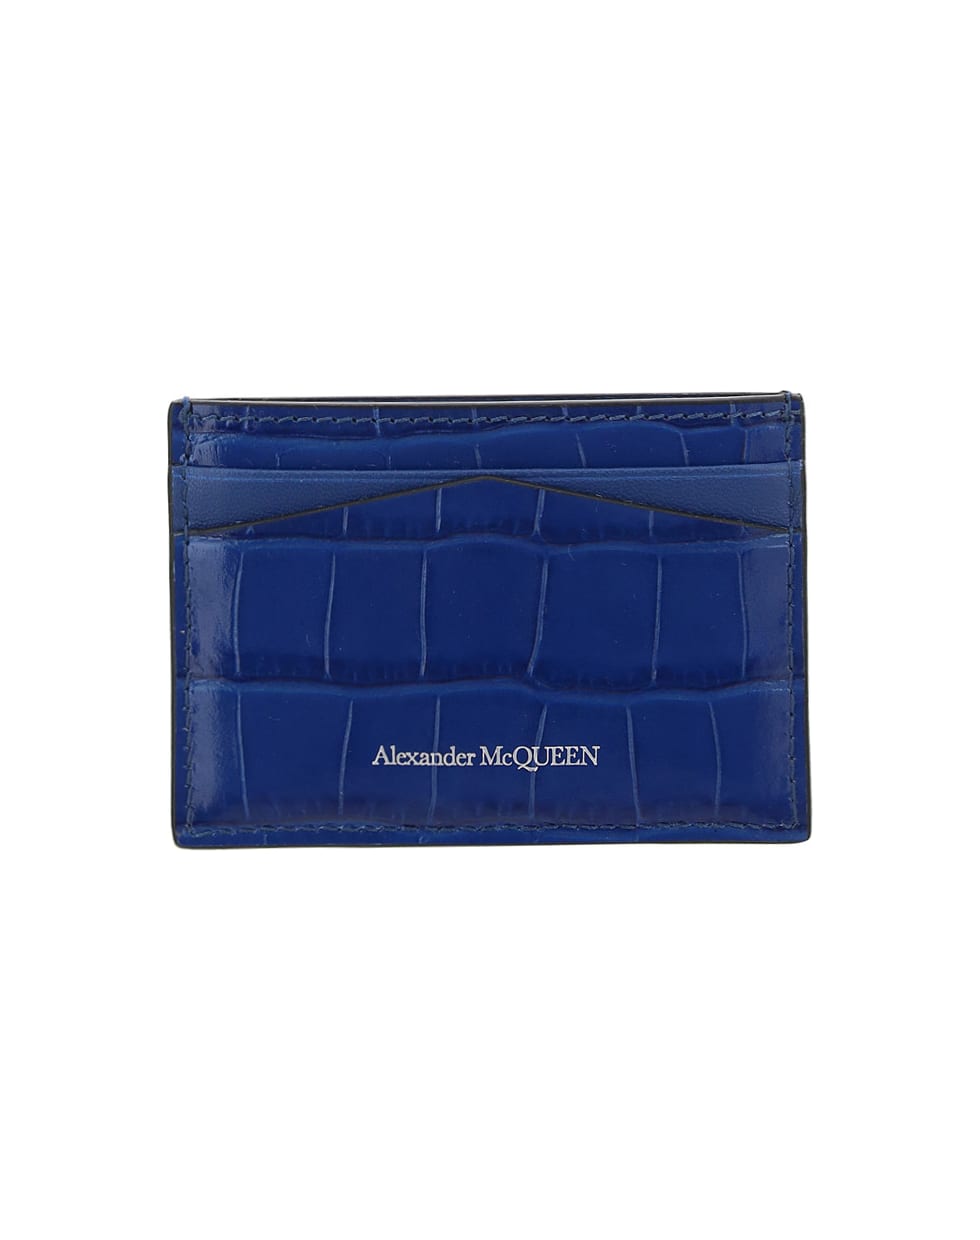 Alexander McQueen Alexander Mc Queen Card Holder - Washed denim